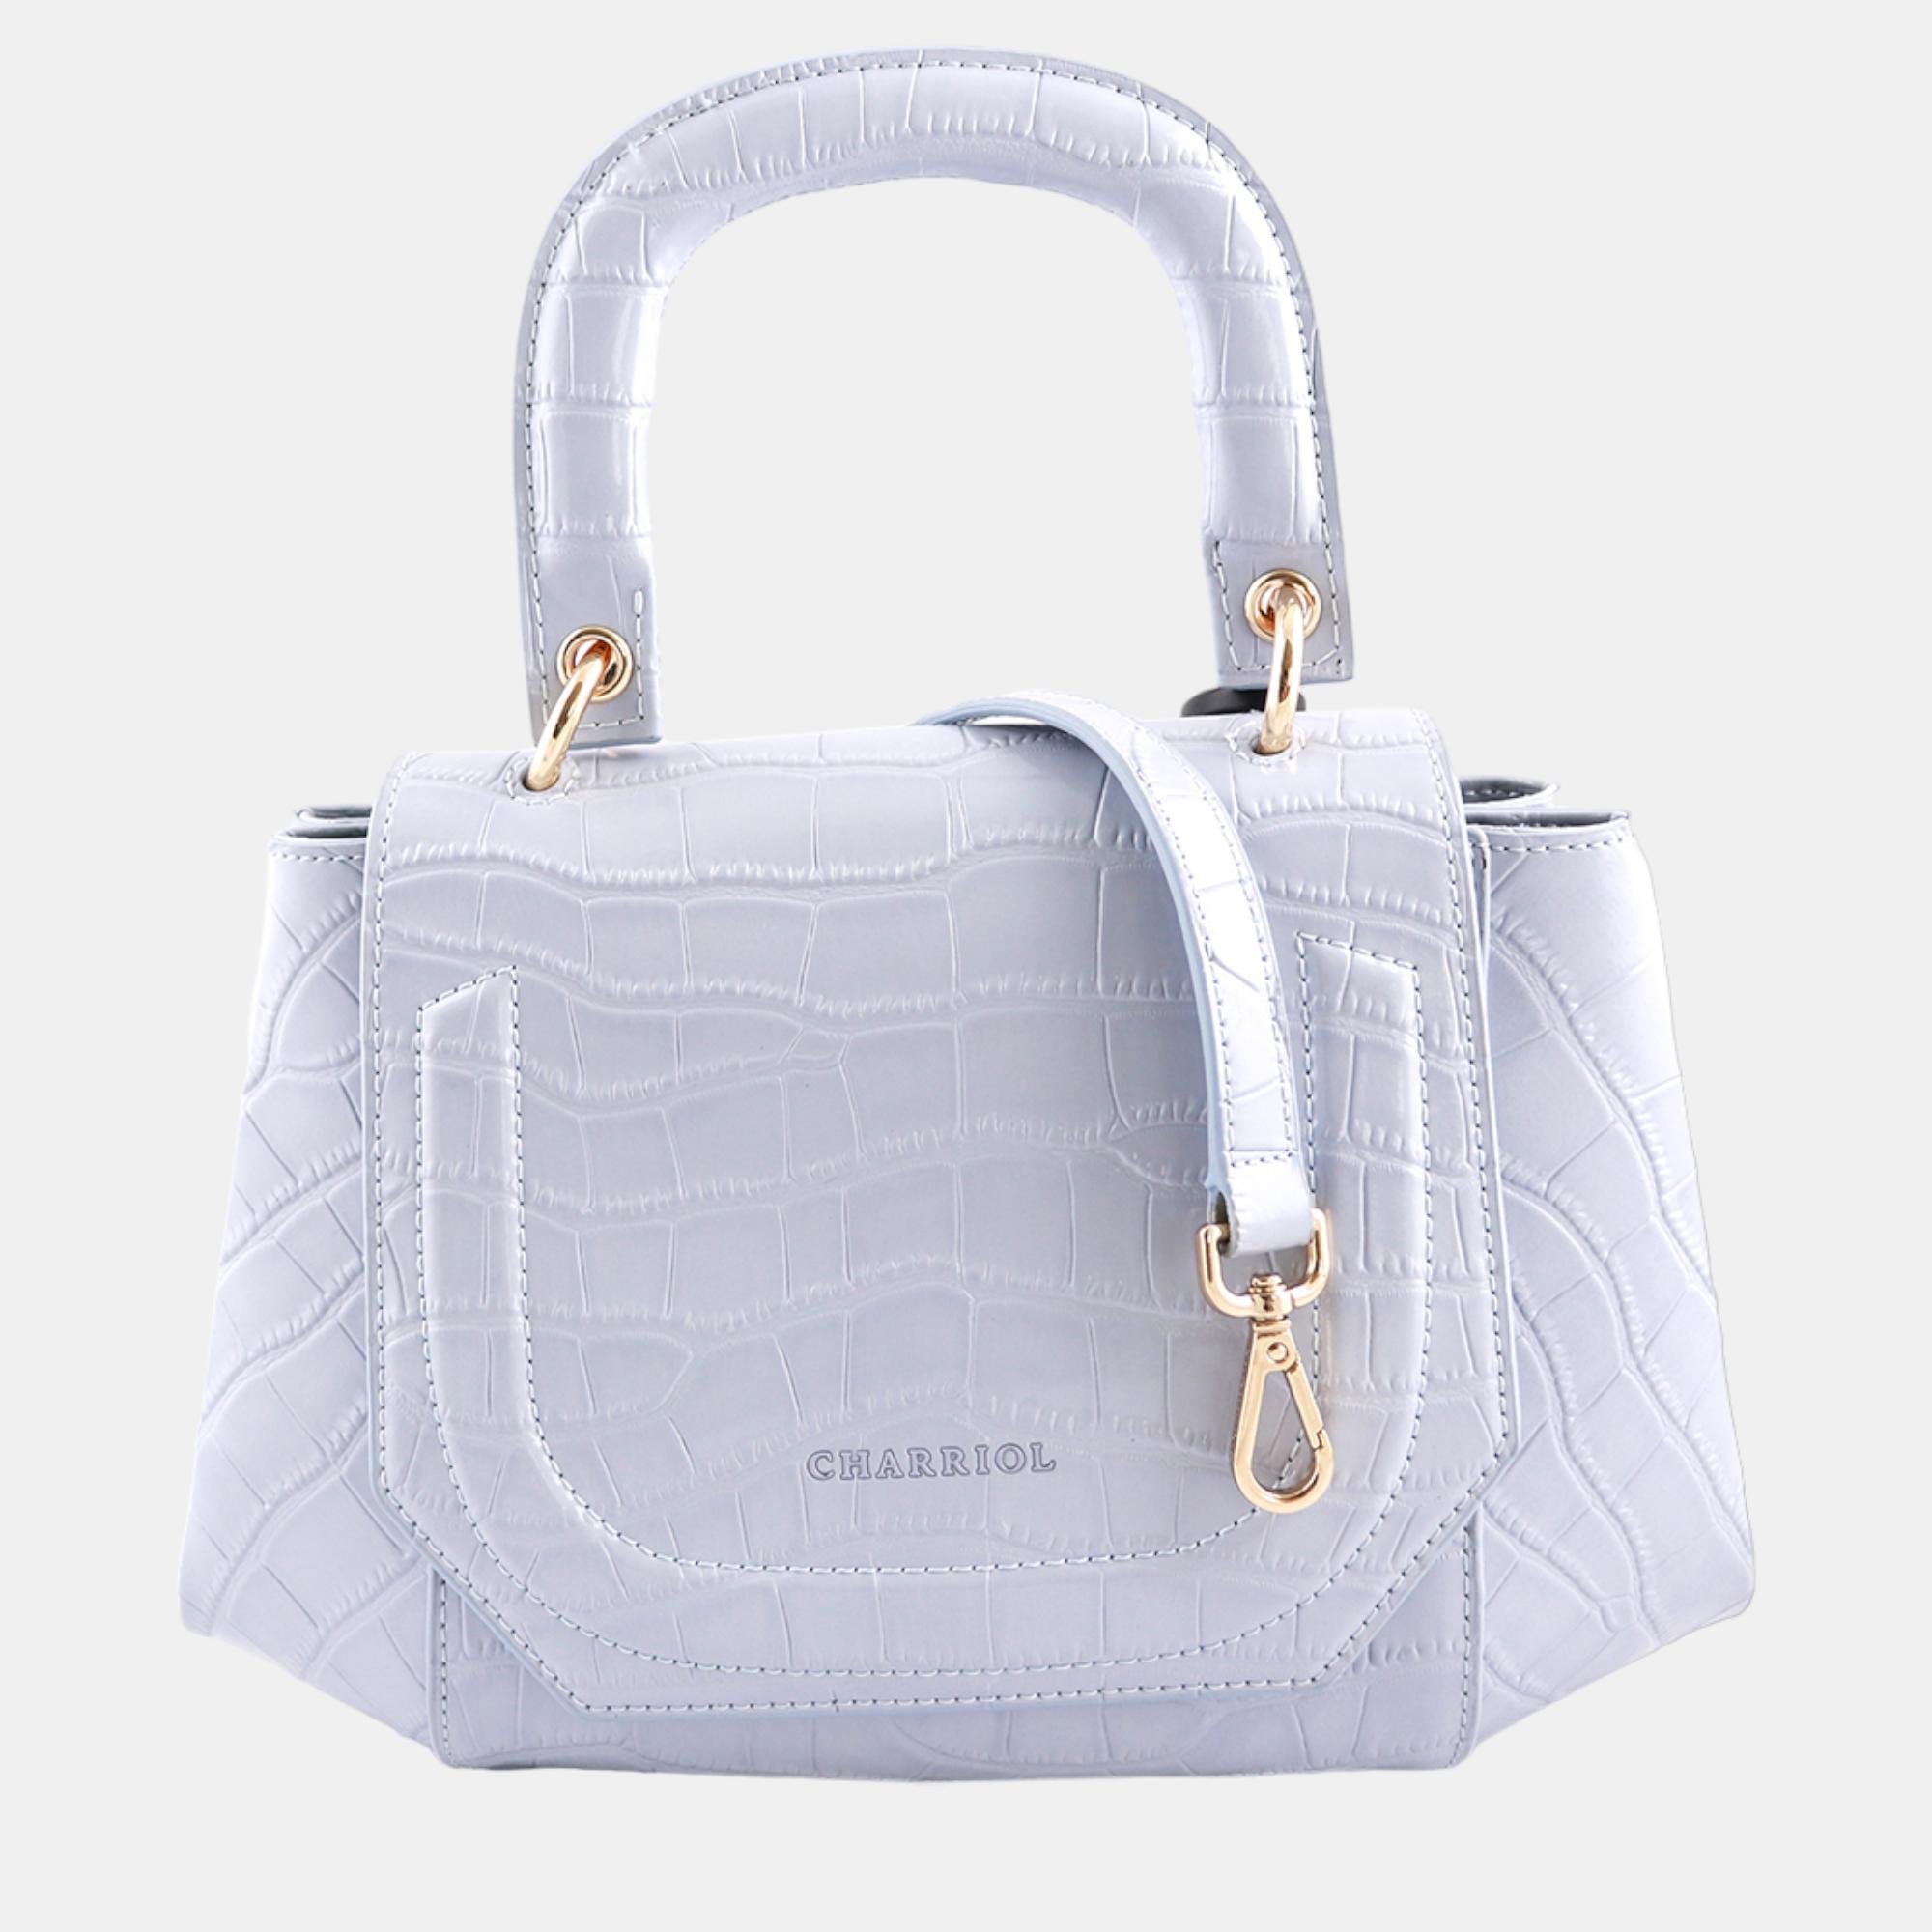 Charriol blue leather passion handbag